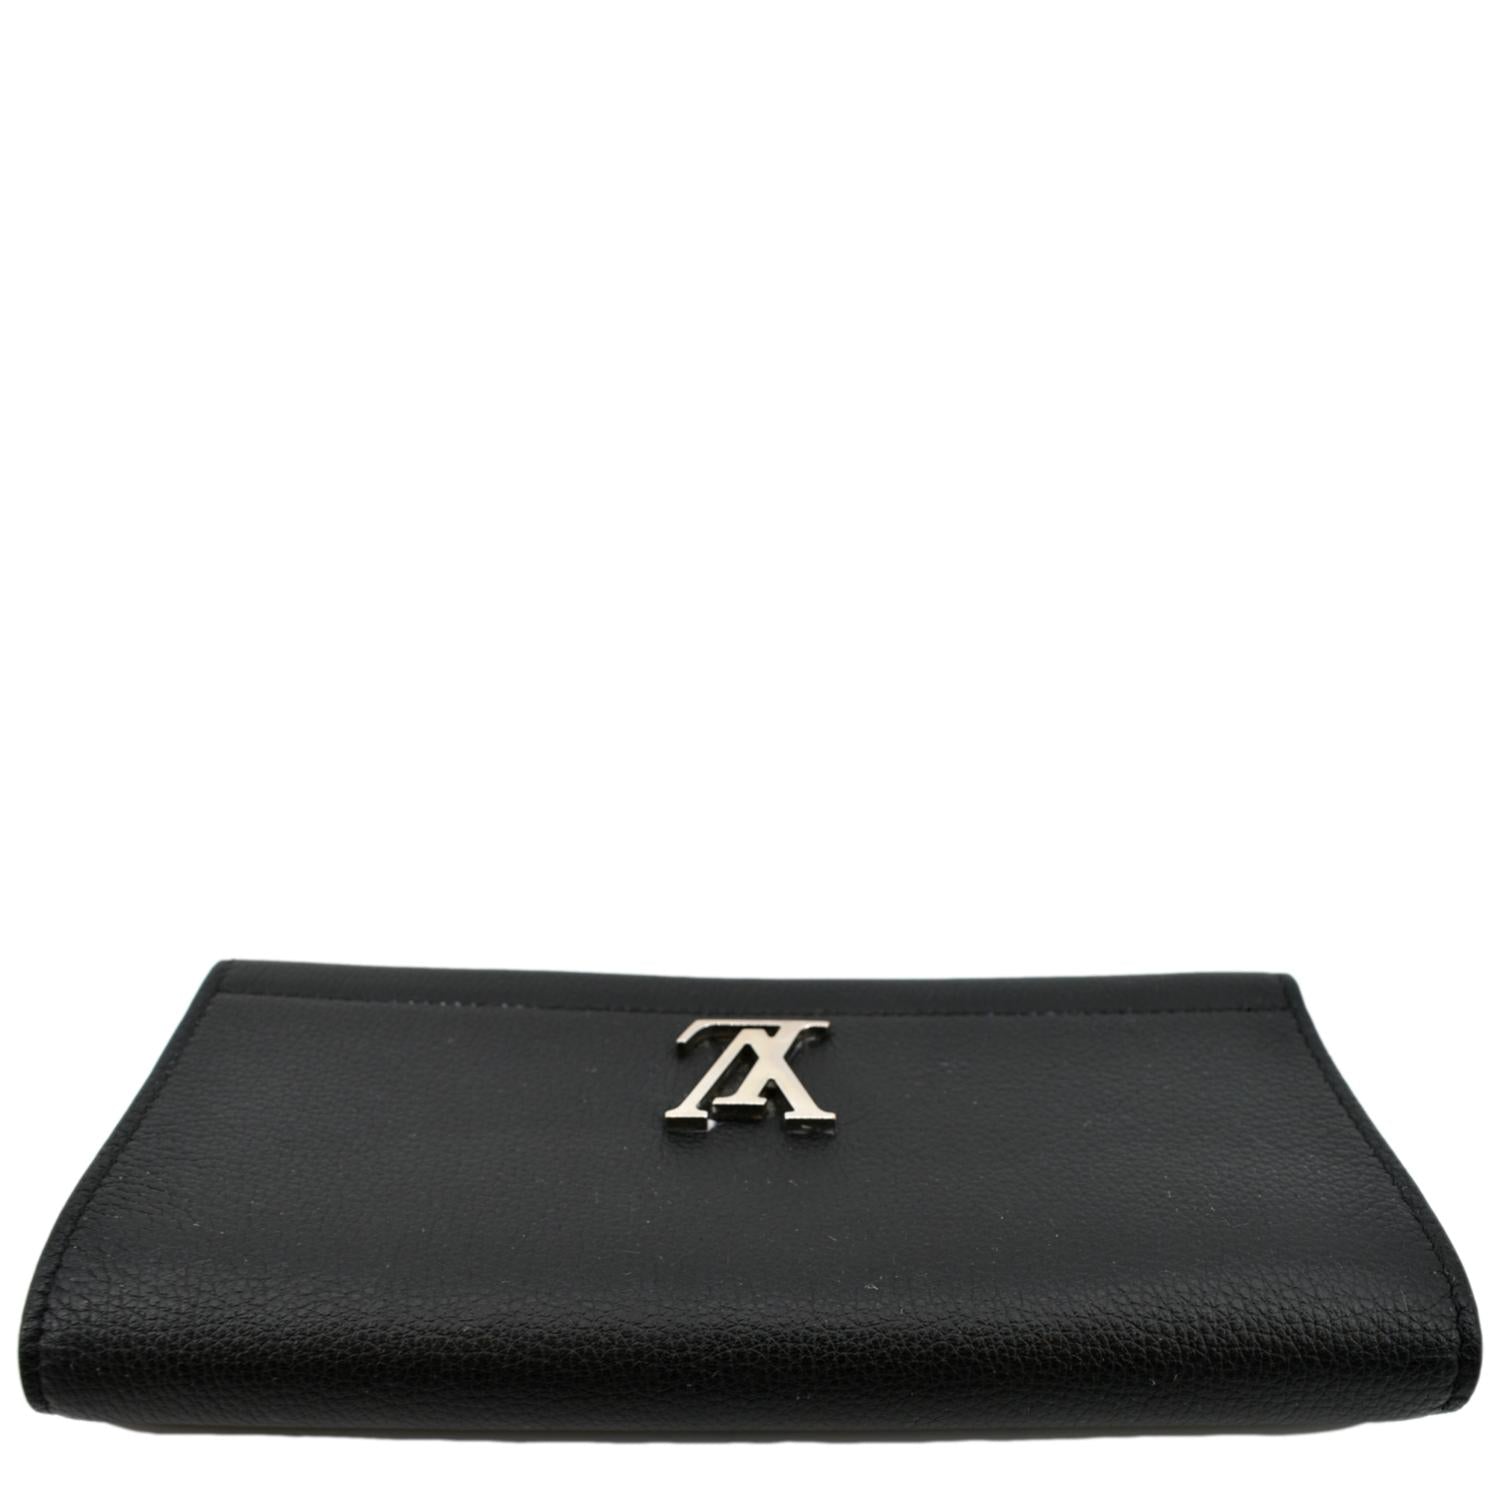 Authentic Pre-Owned Louis Vuitton Soft Calf Leather Lockme 2 Wallet